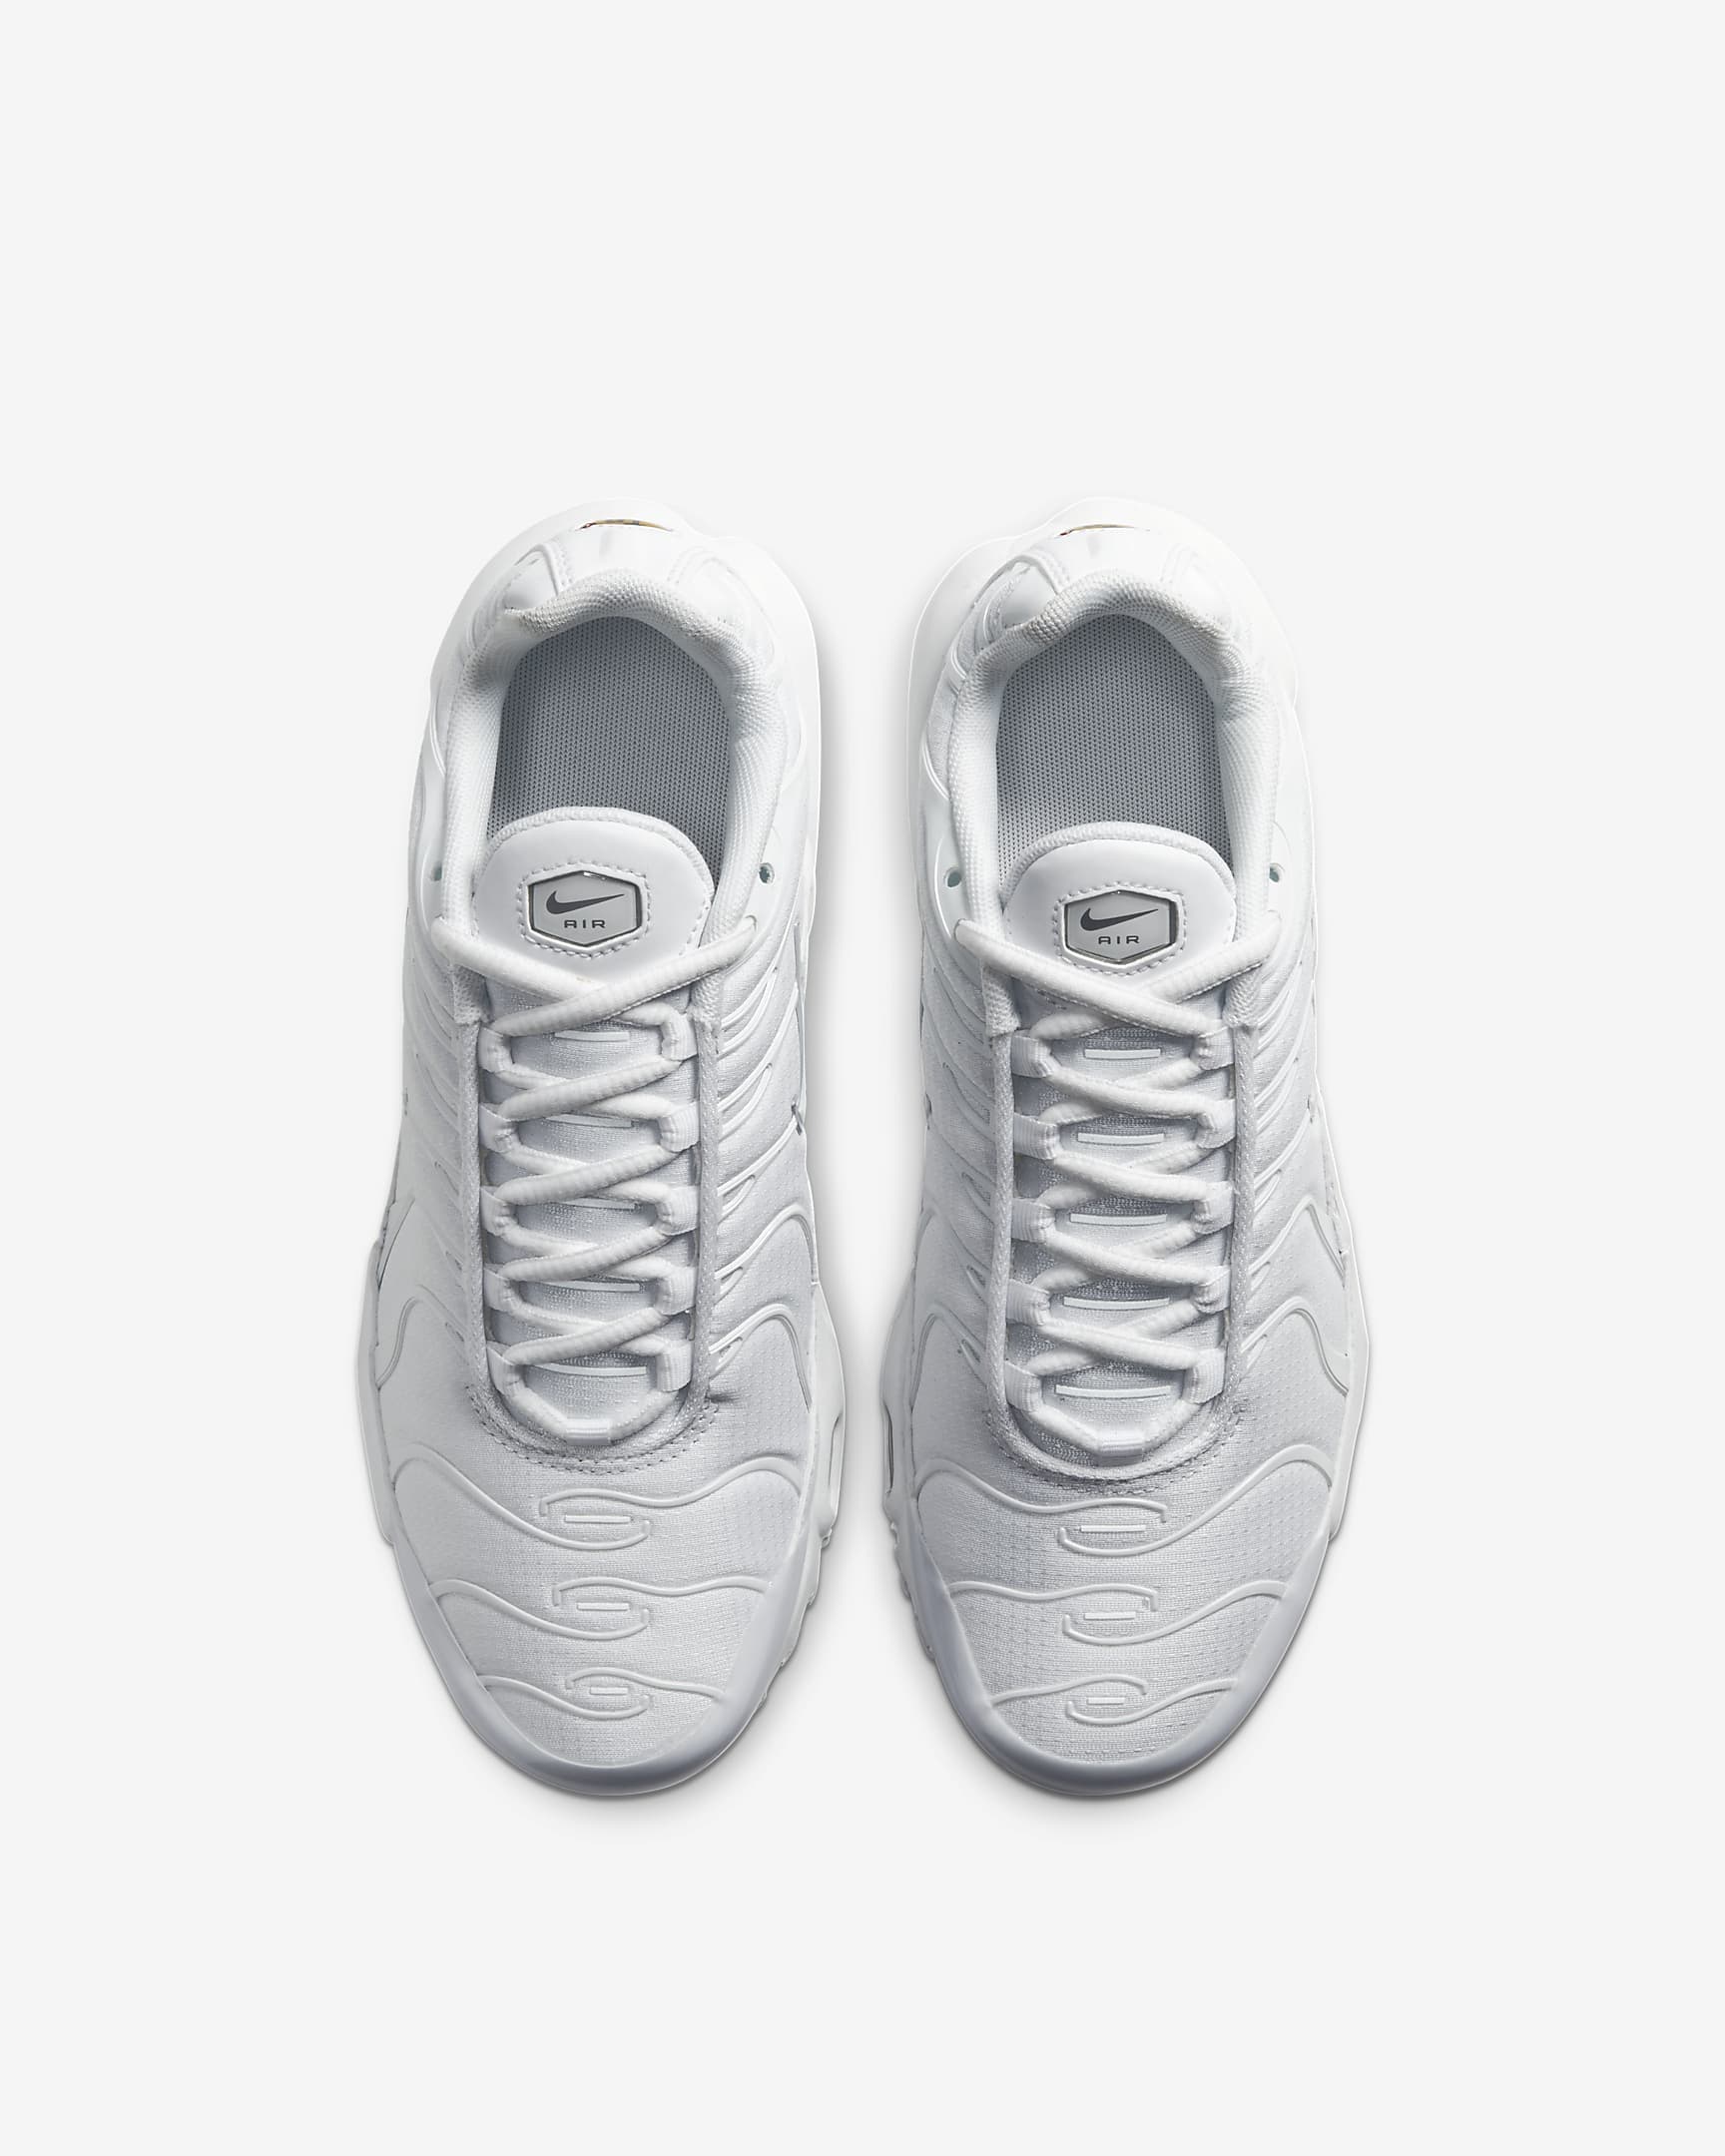 Buty dla dużych dzieci Nike Air Max Plus - Biel/Metallic Silver/Biel